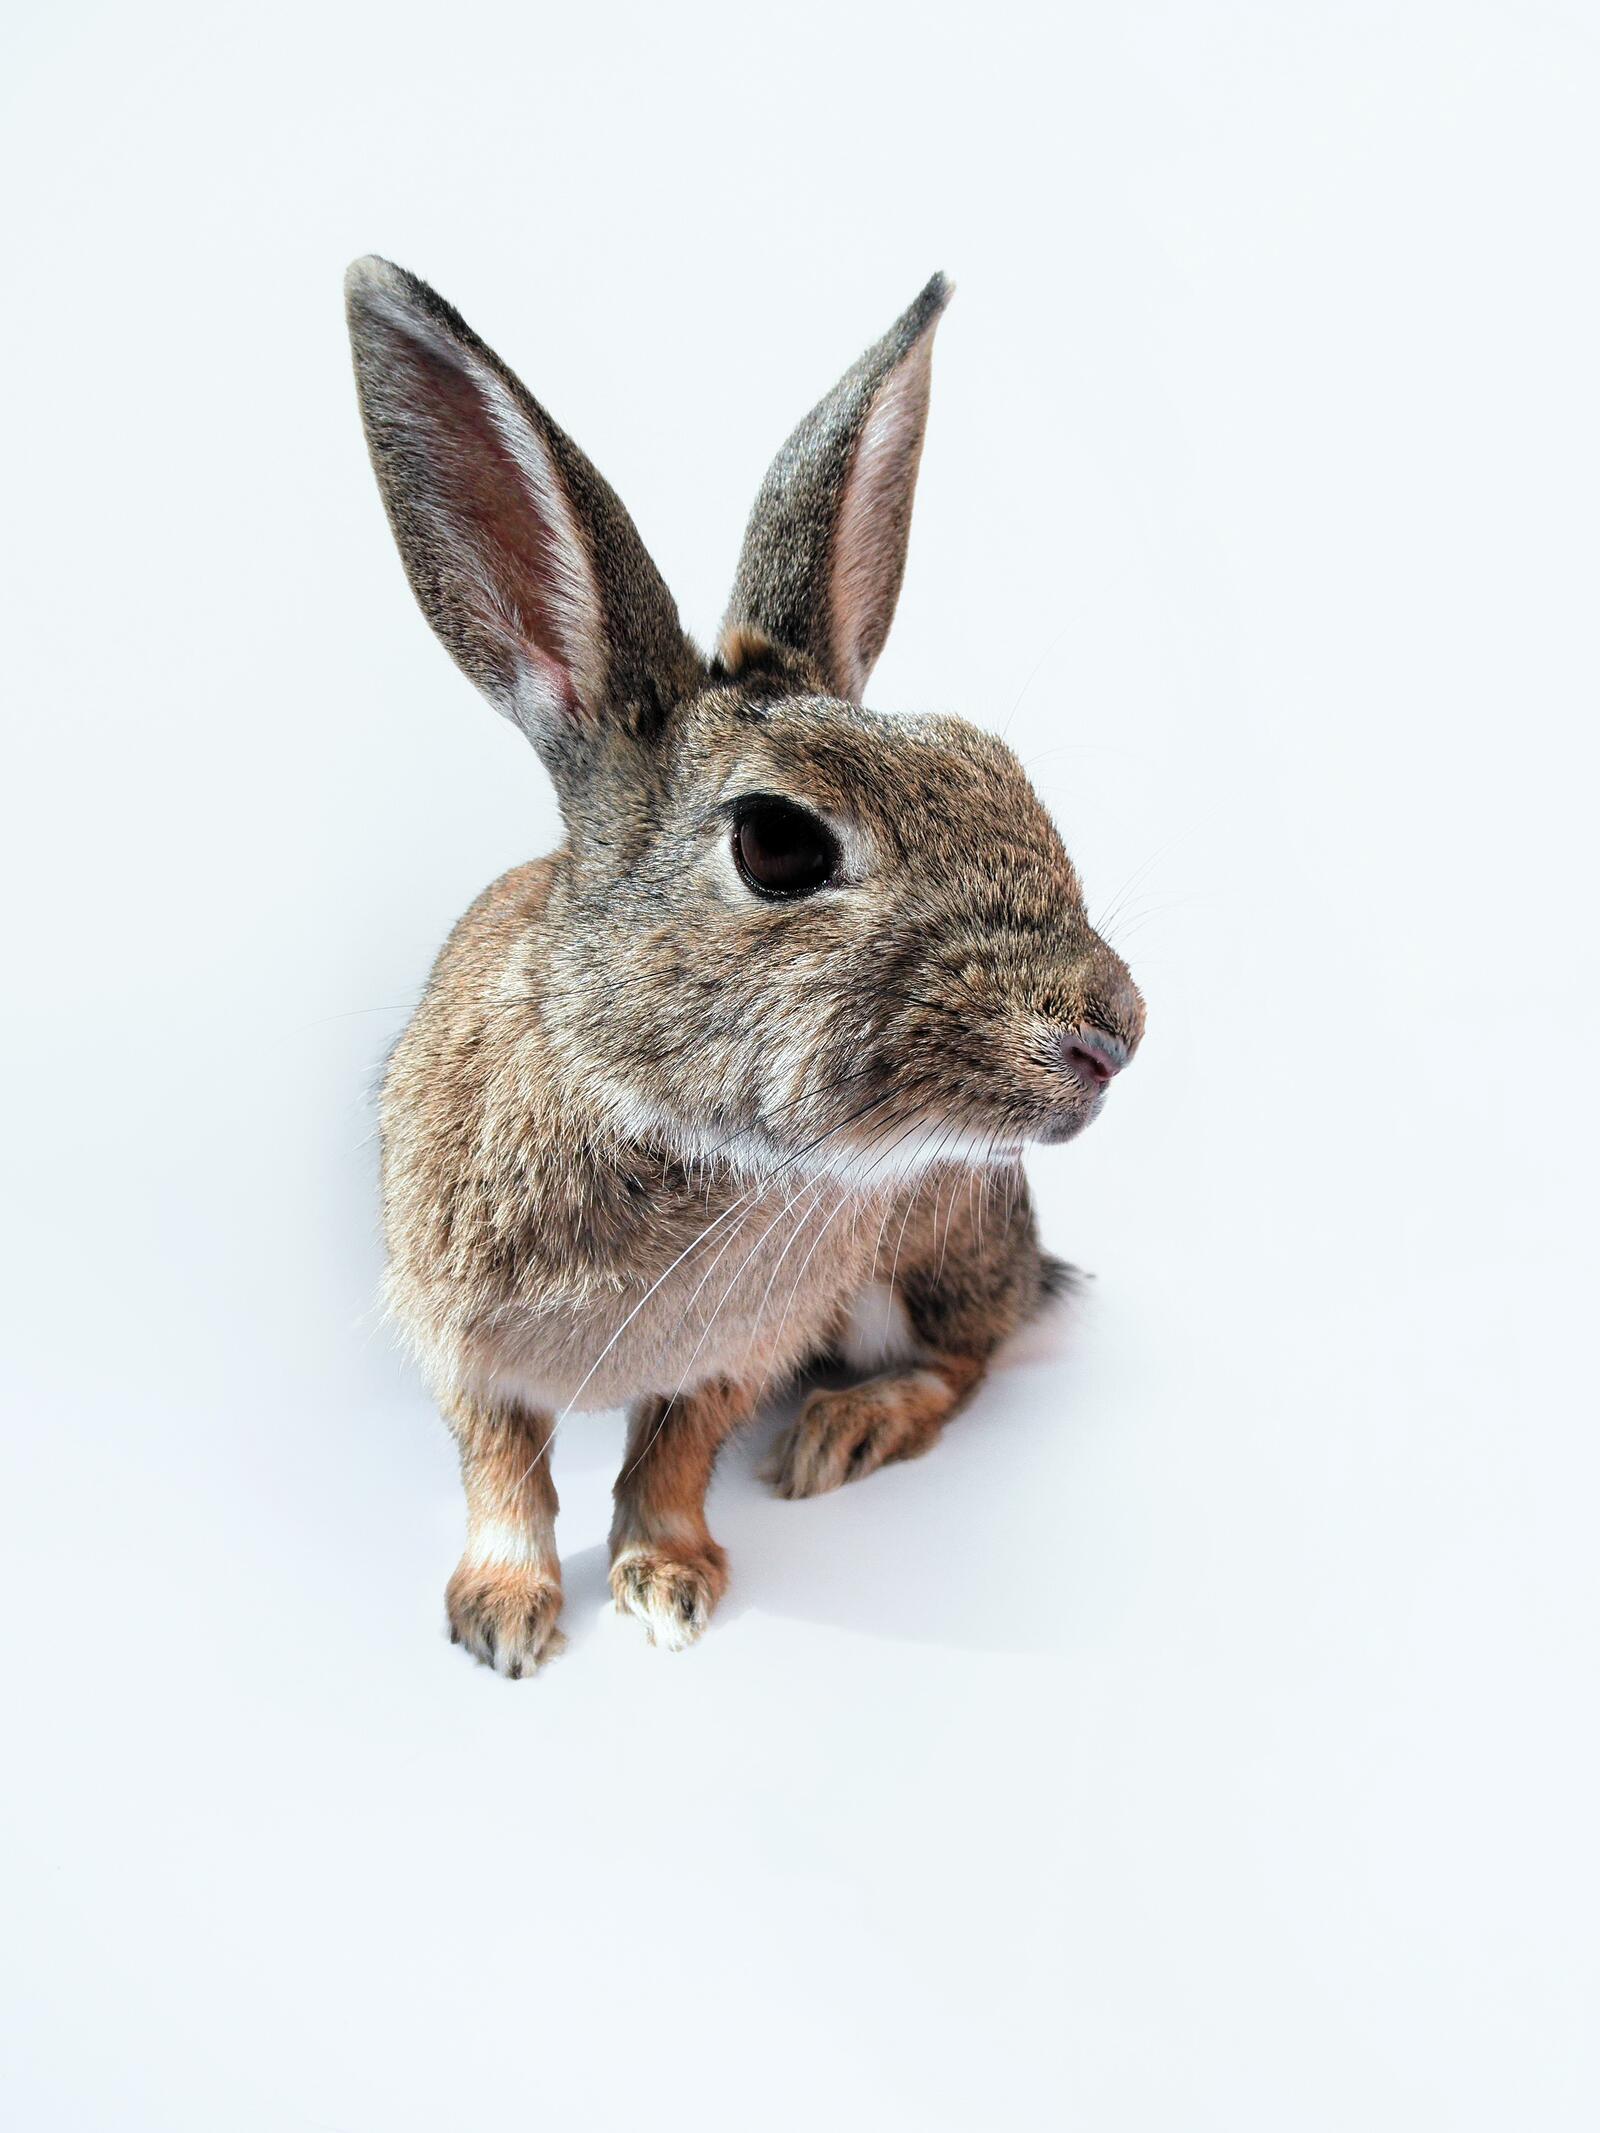 Wallpapers mammal fauna rabbit on the desktop